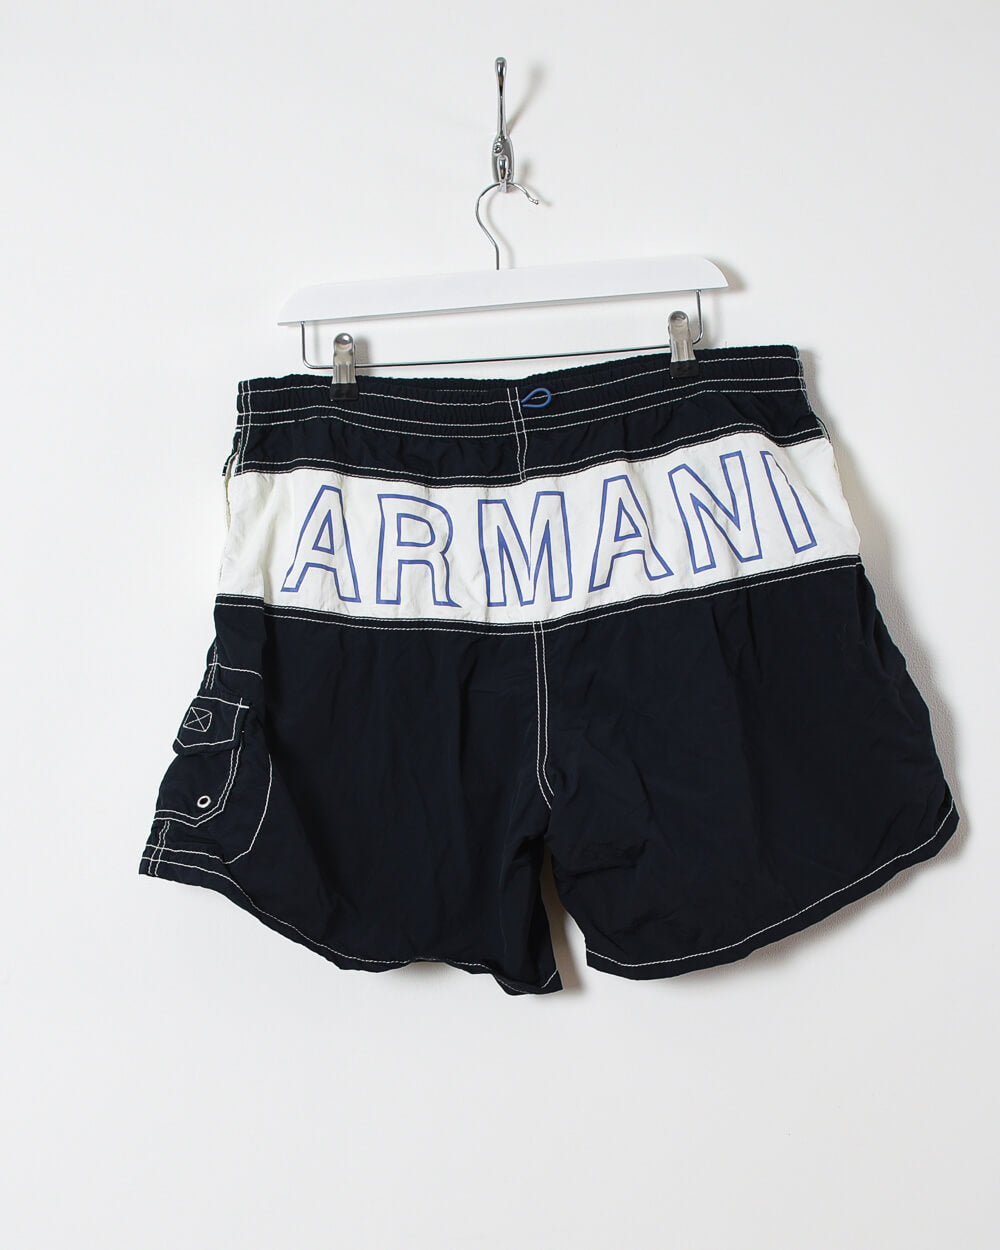 Emporio Armani Swimwear Shorts - W36 - Domno Vintage 90s, 80s, 00s Retro and Vintage Clothing 